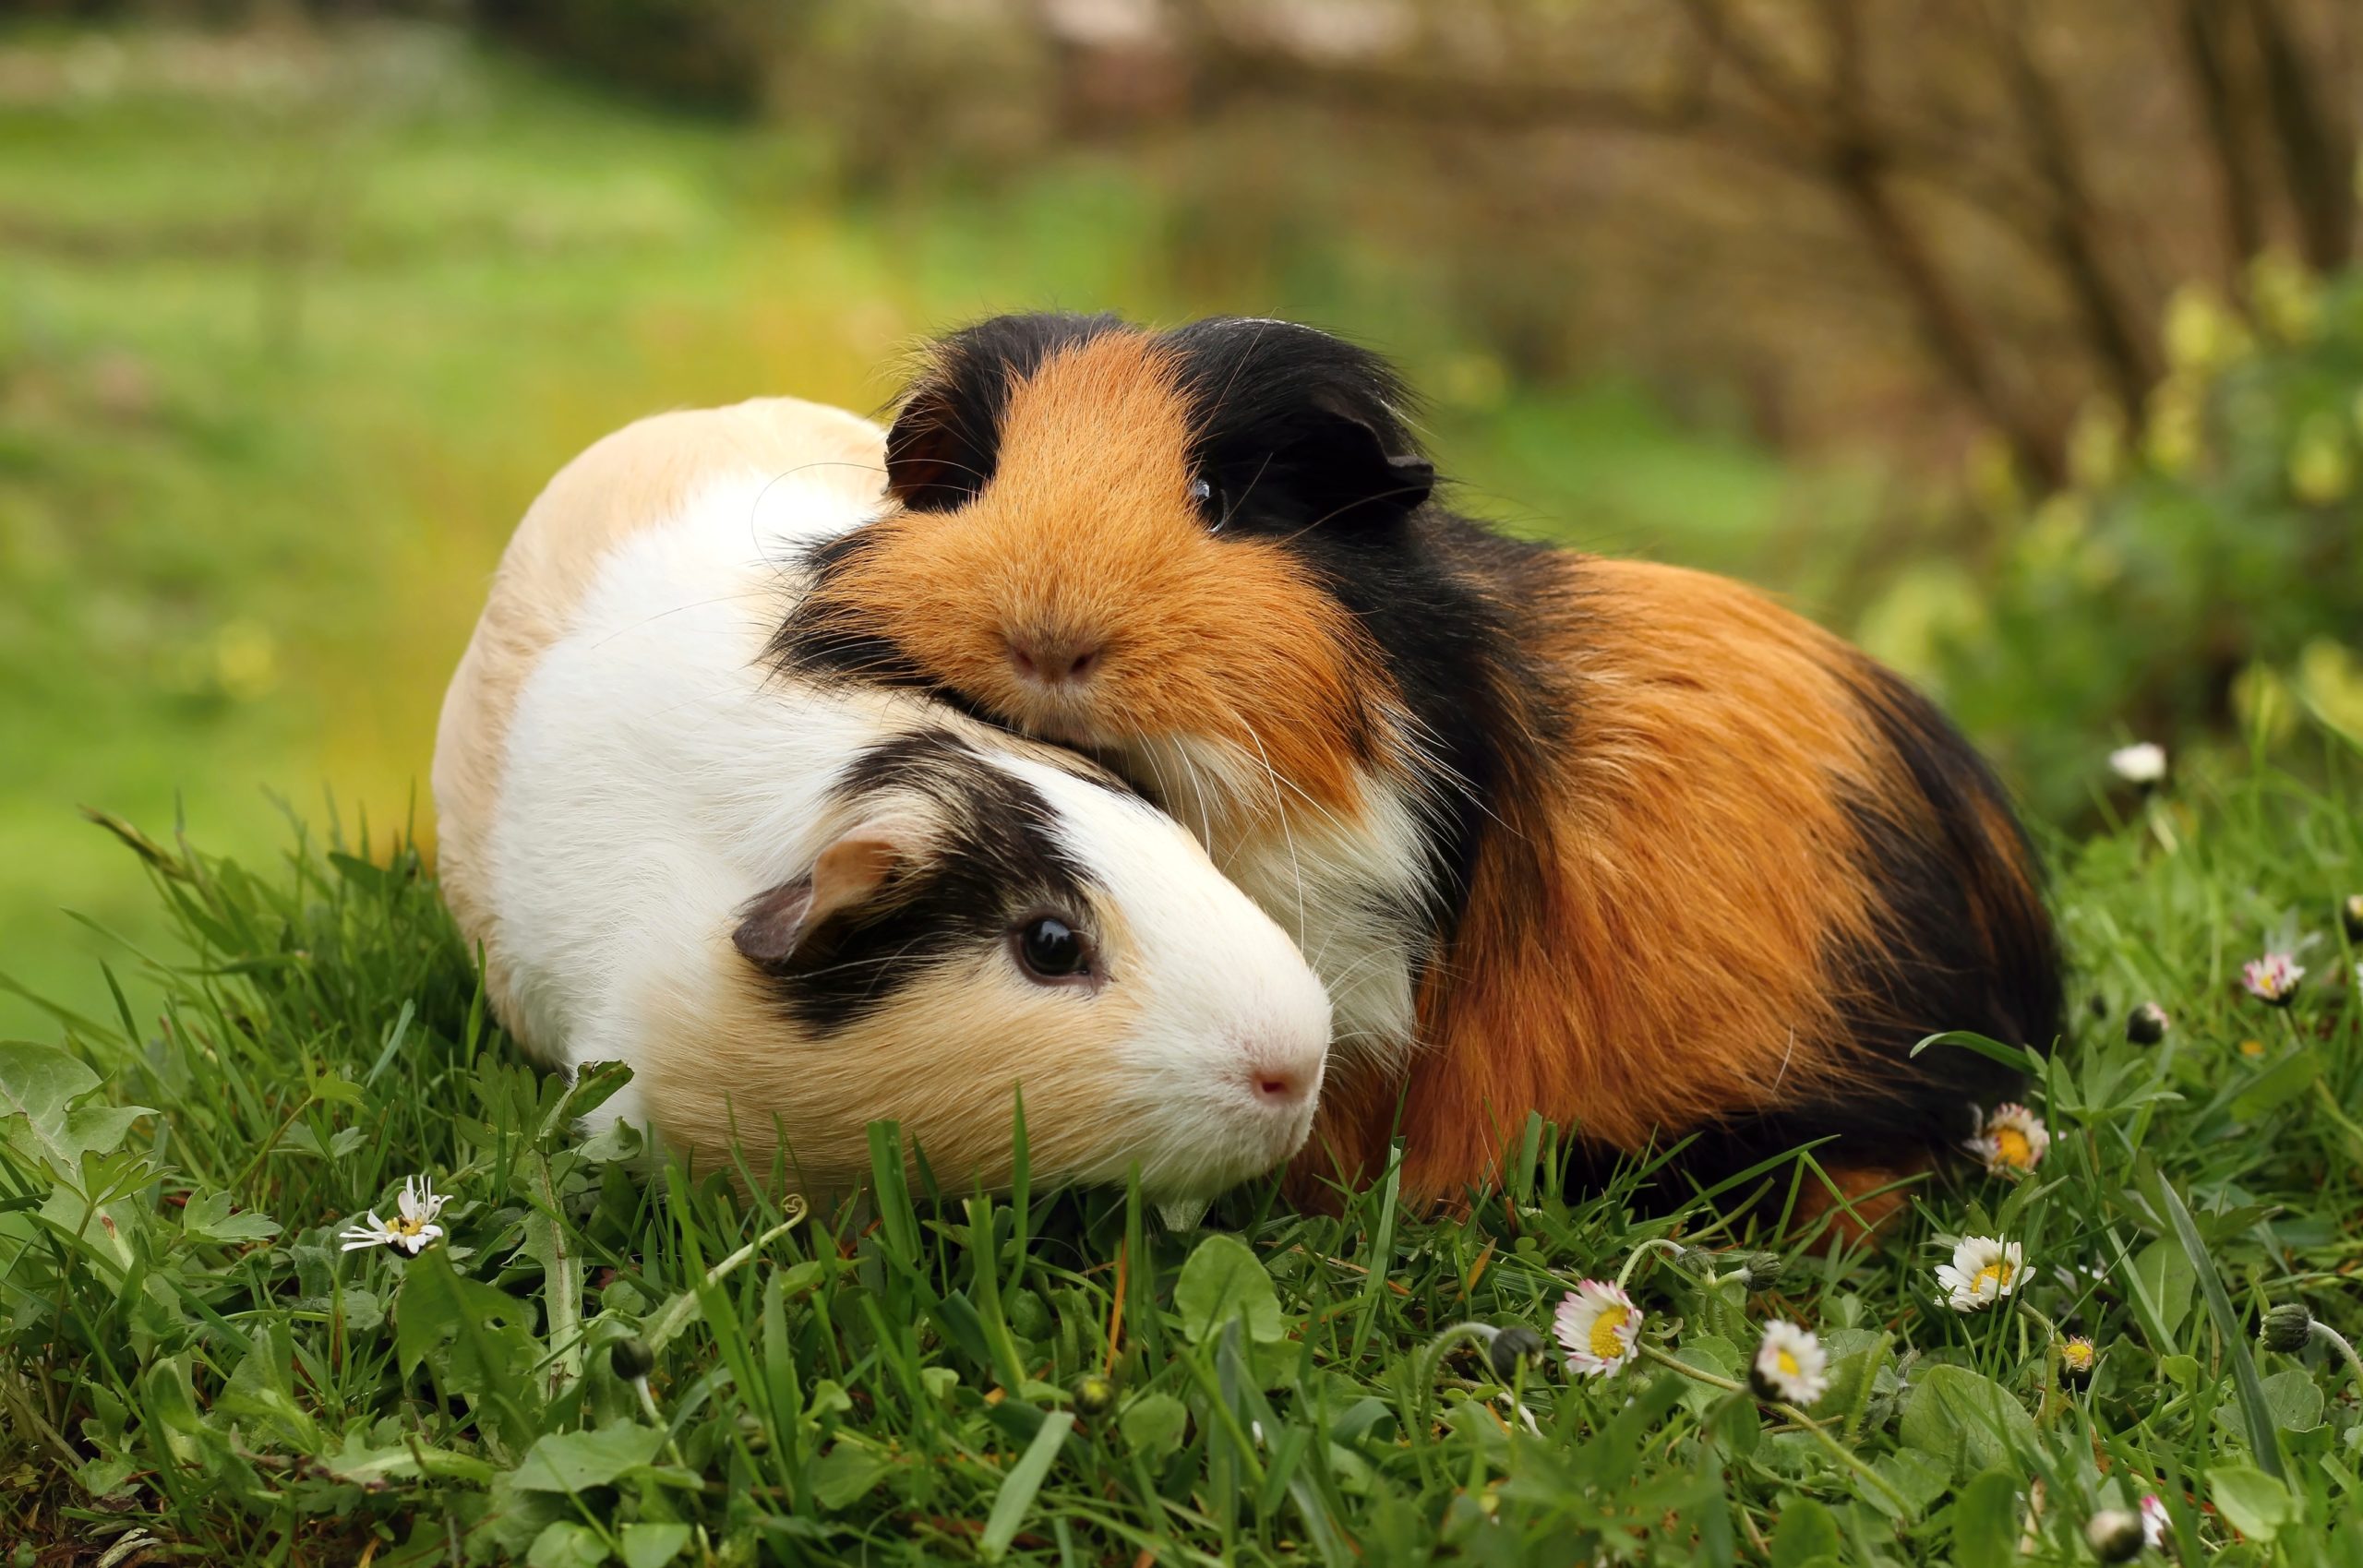 Guinea pigs cuddling